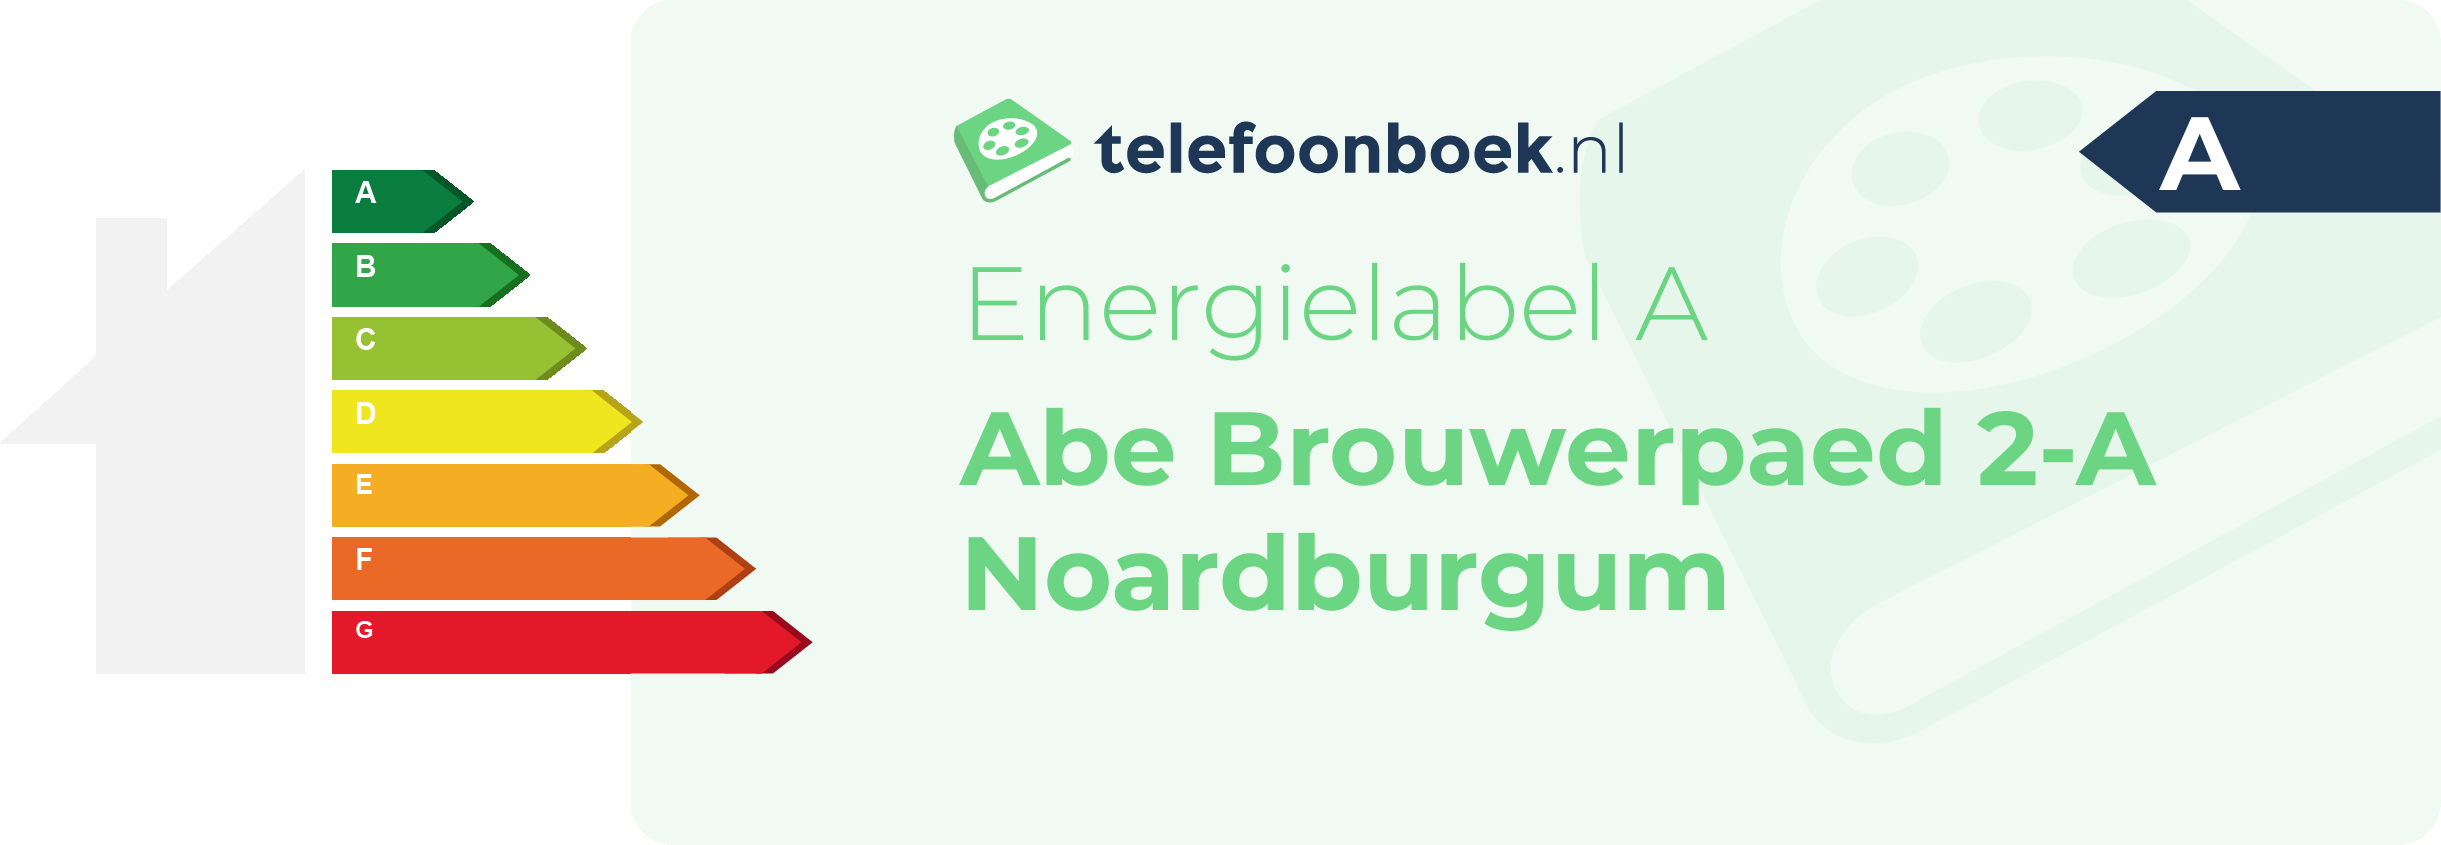 Energielabel Abe Brouwerpaed 2-A Noardburgum